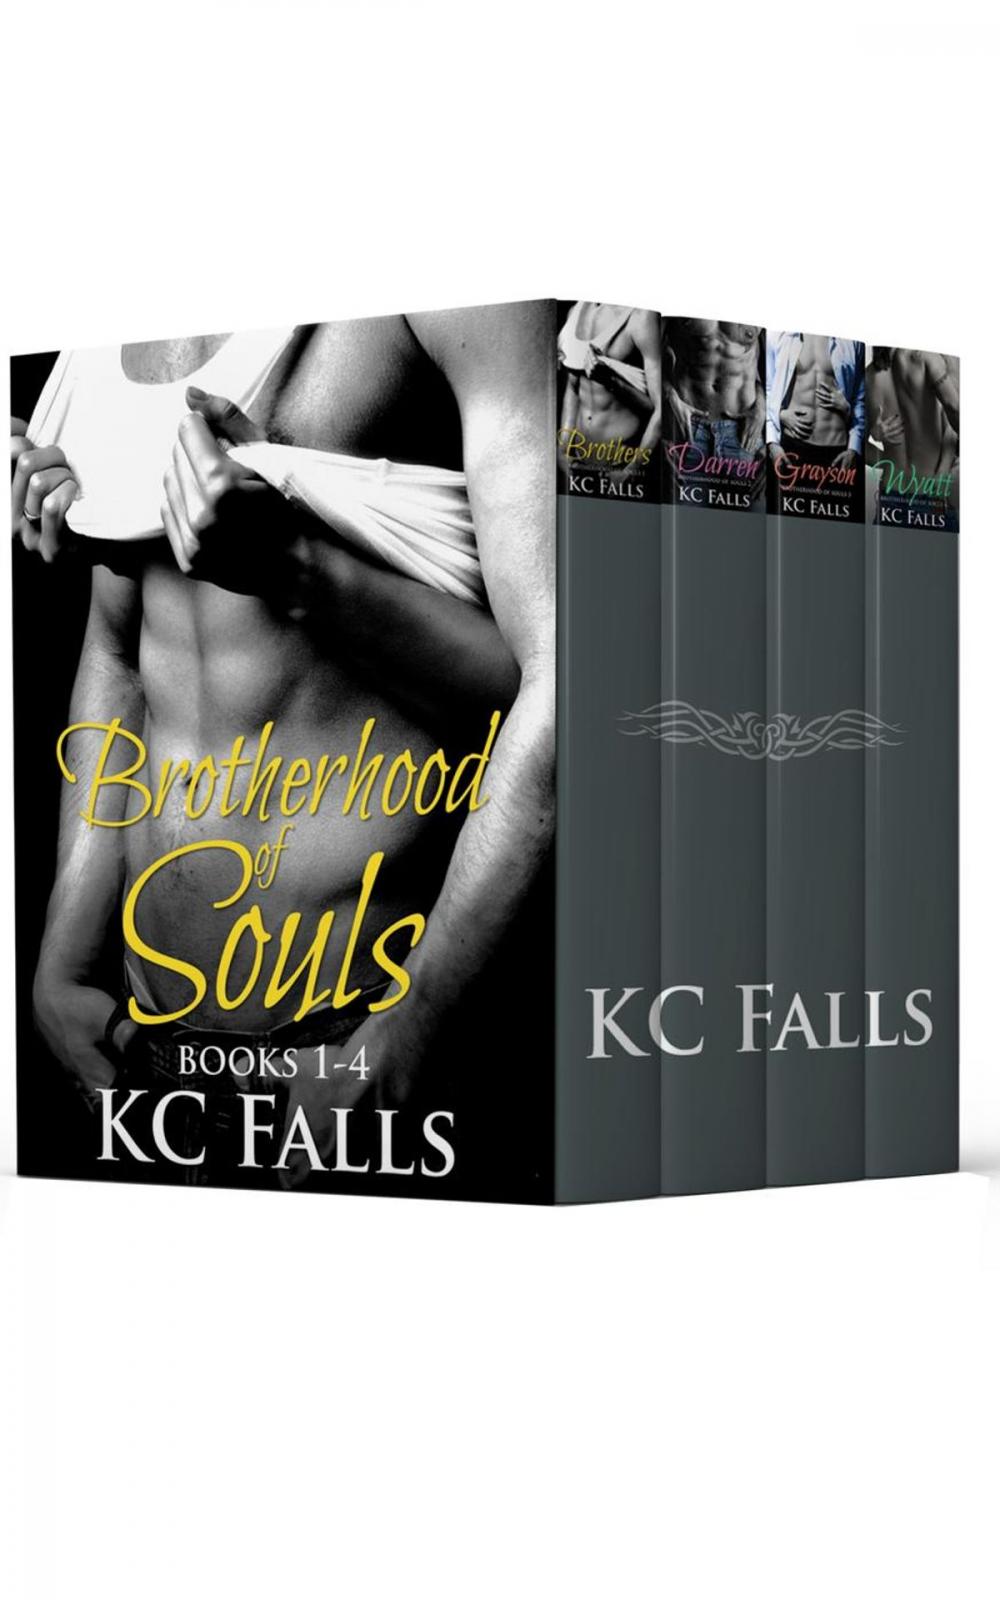 Big bigCover of "Brotherhood of Souls" Books 1-4